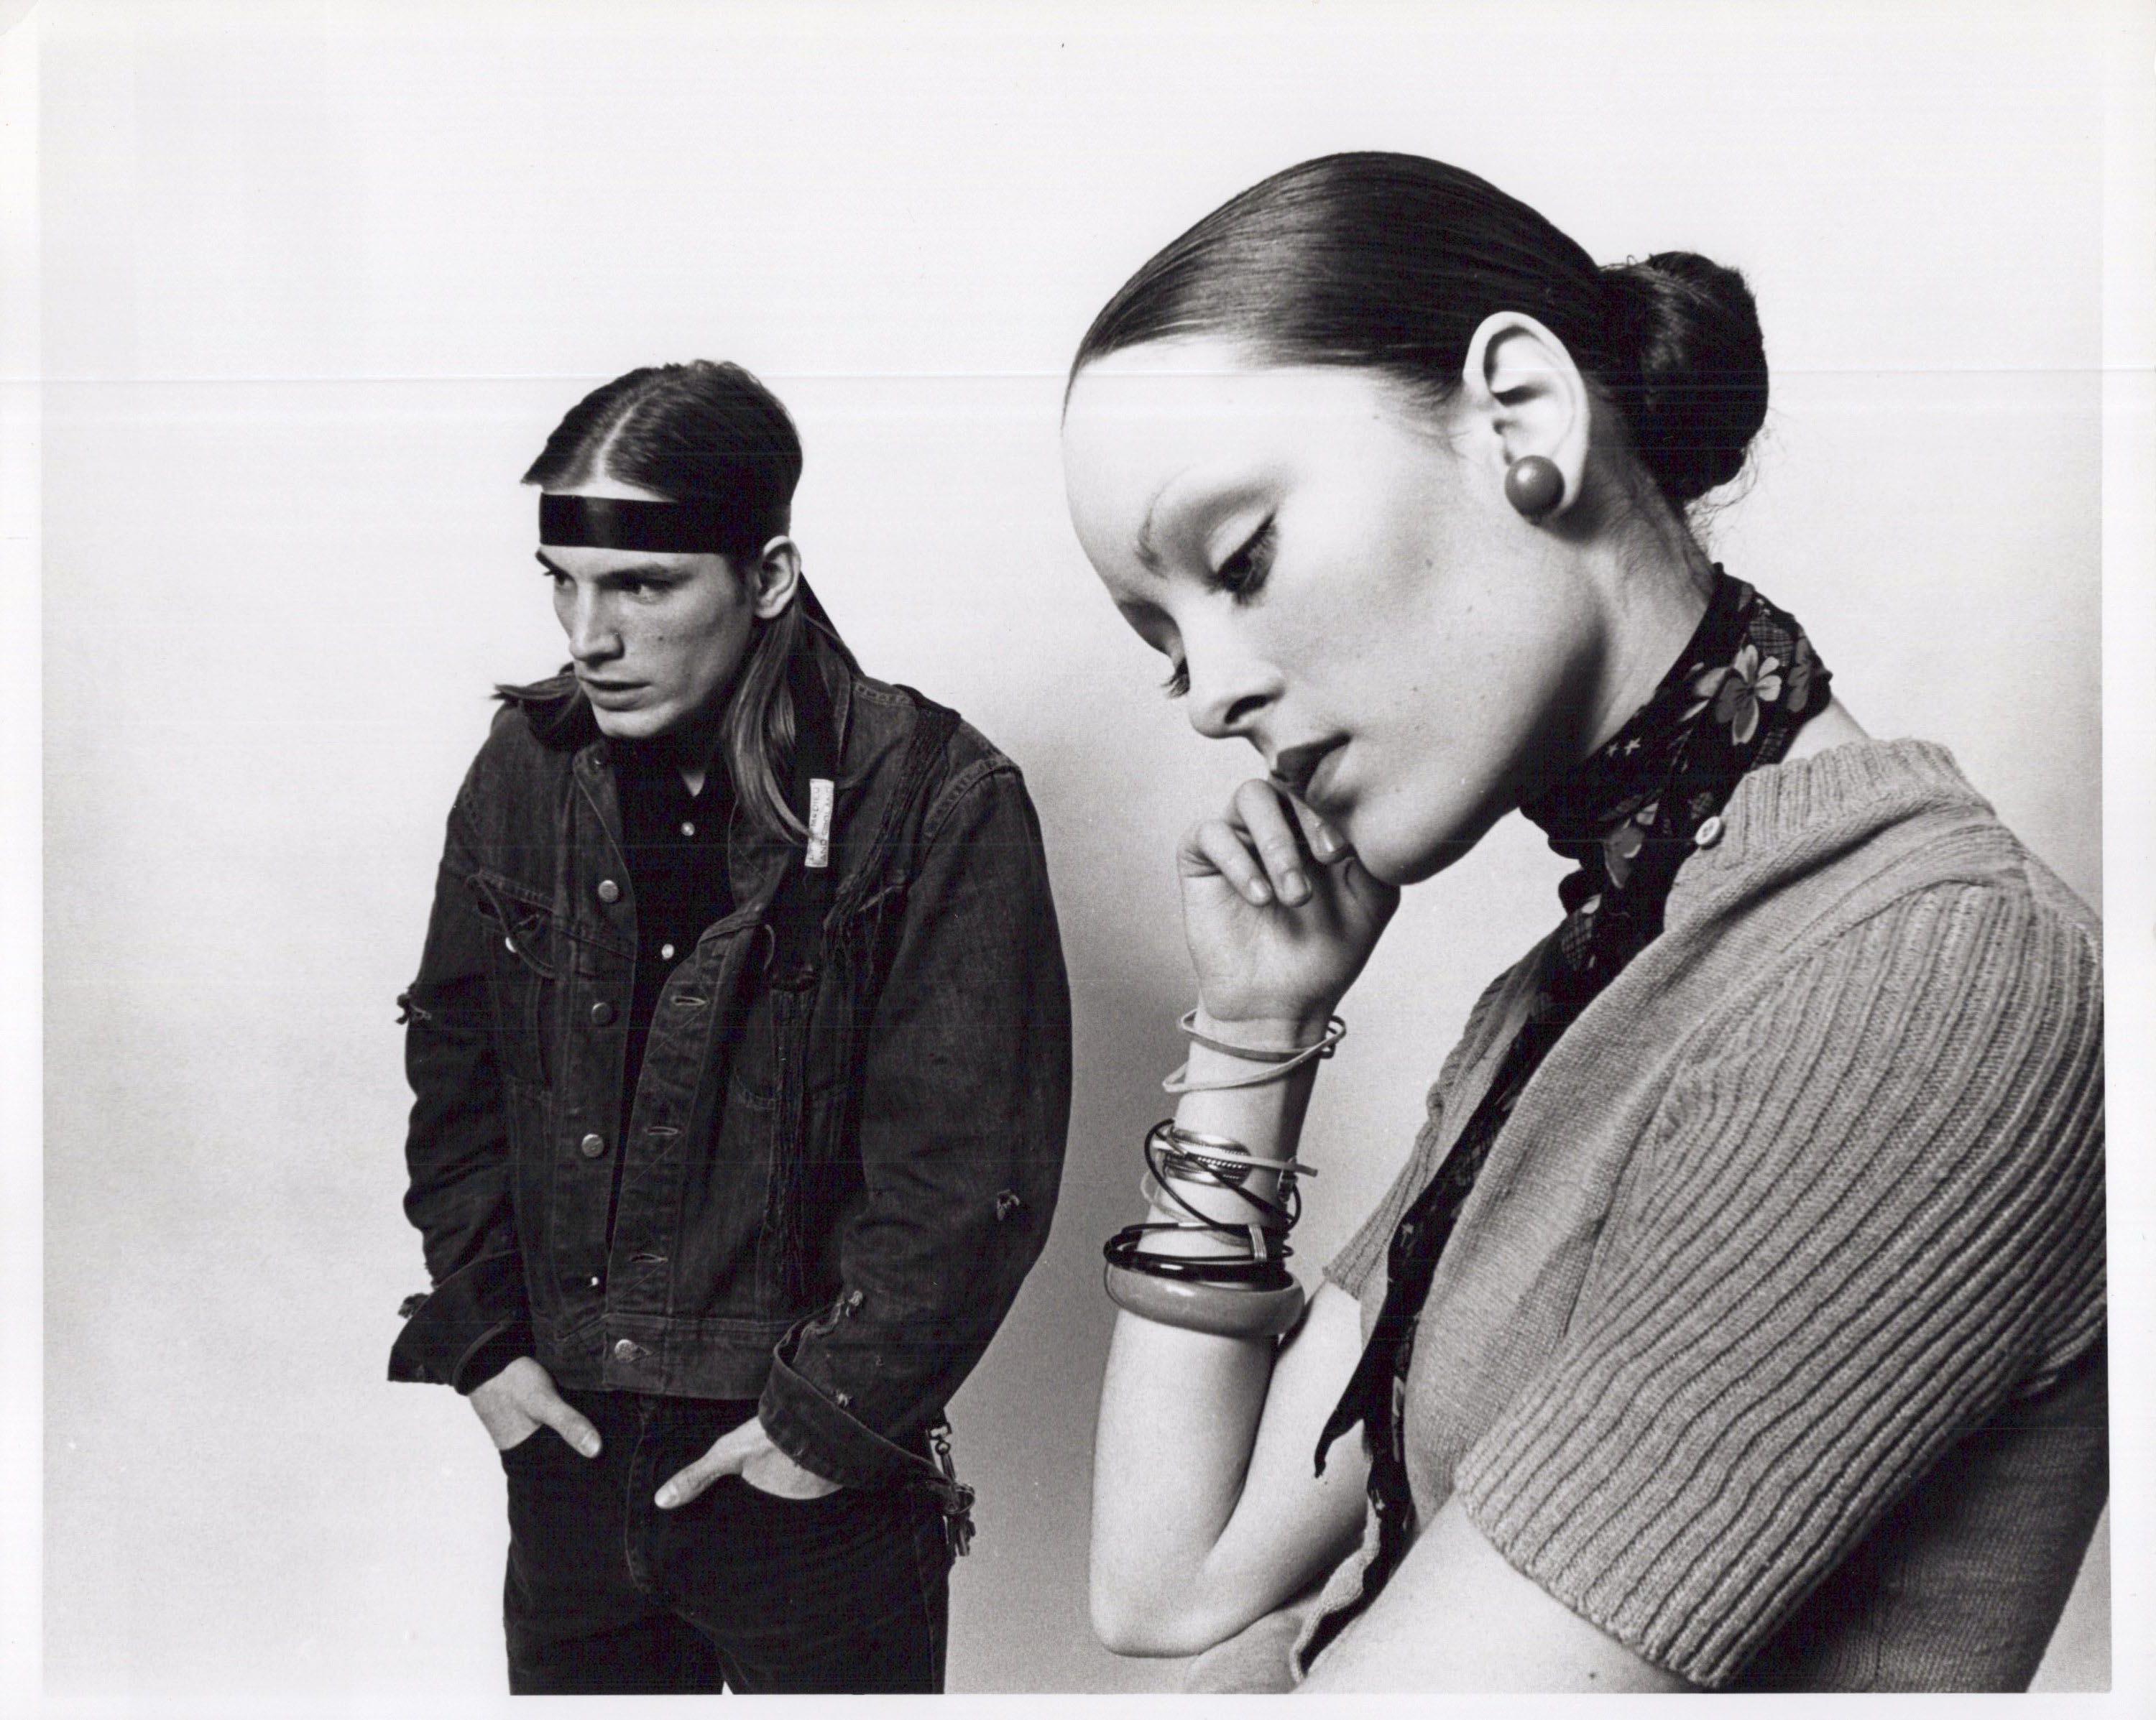 Jack Mitchell Black and White Photograph - Andy Warhol Superstars Joe Dallesandro and Jane Forth, stars of 'Trash'